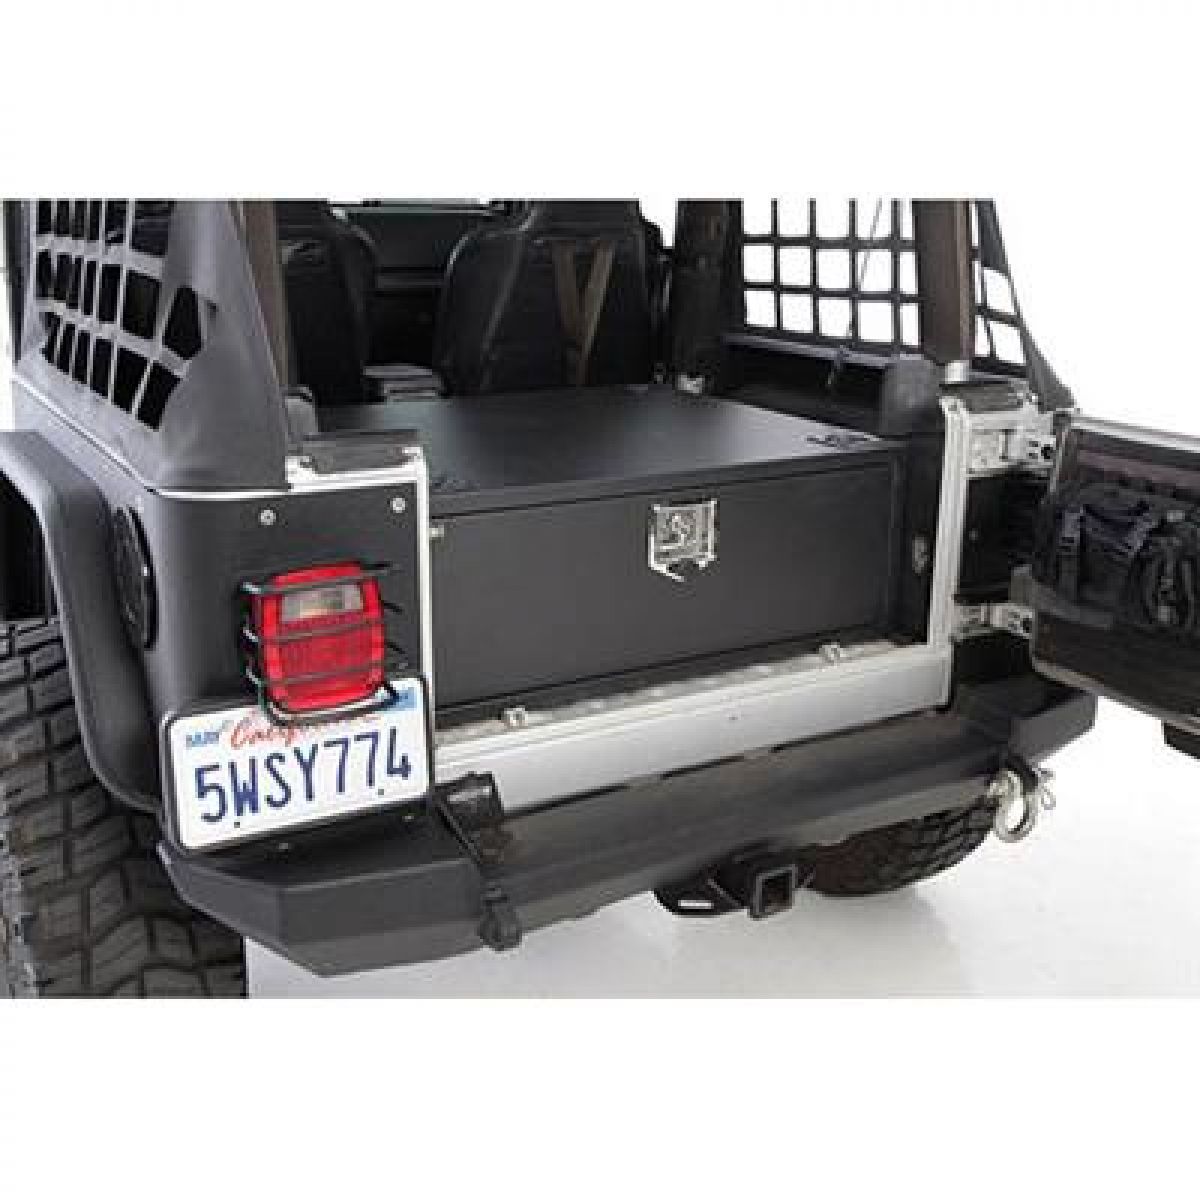 147 x 48 cm Rete posteriore per bagagliaio auto per Jeep Wrangler YJ TJ JK JKU JL JLU 1997-2019 